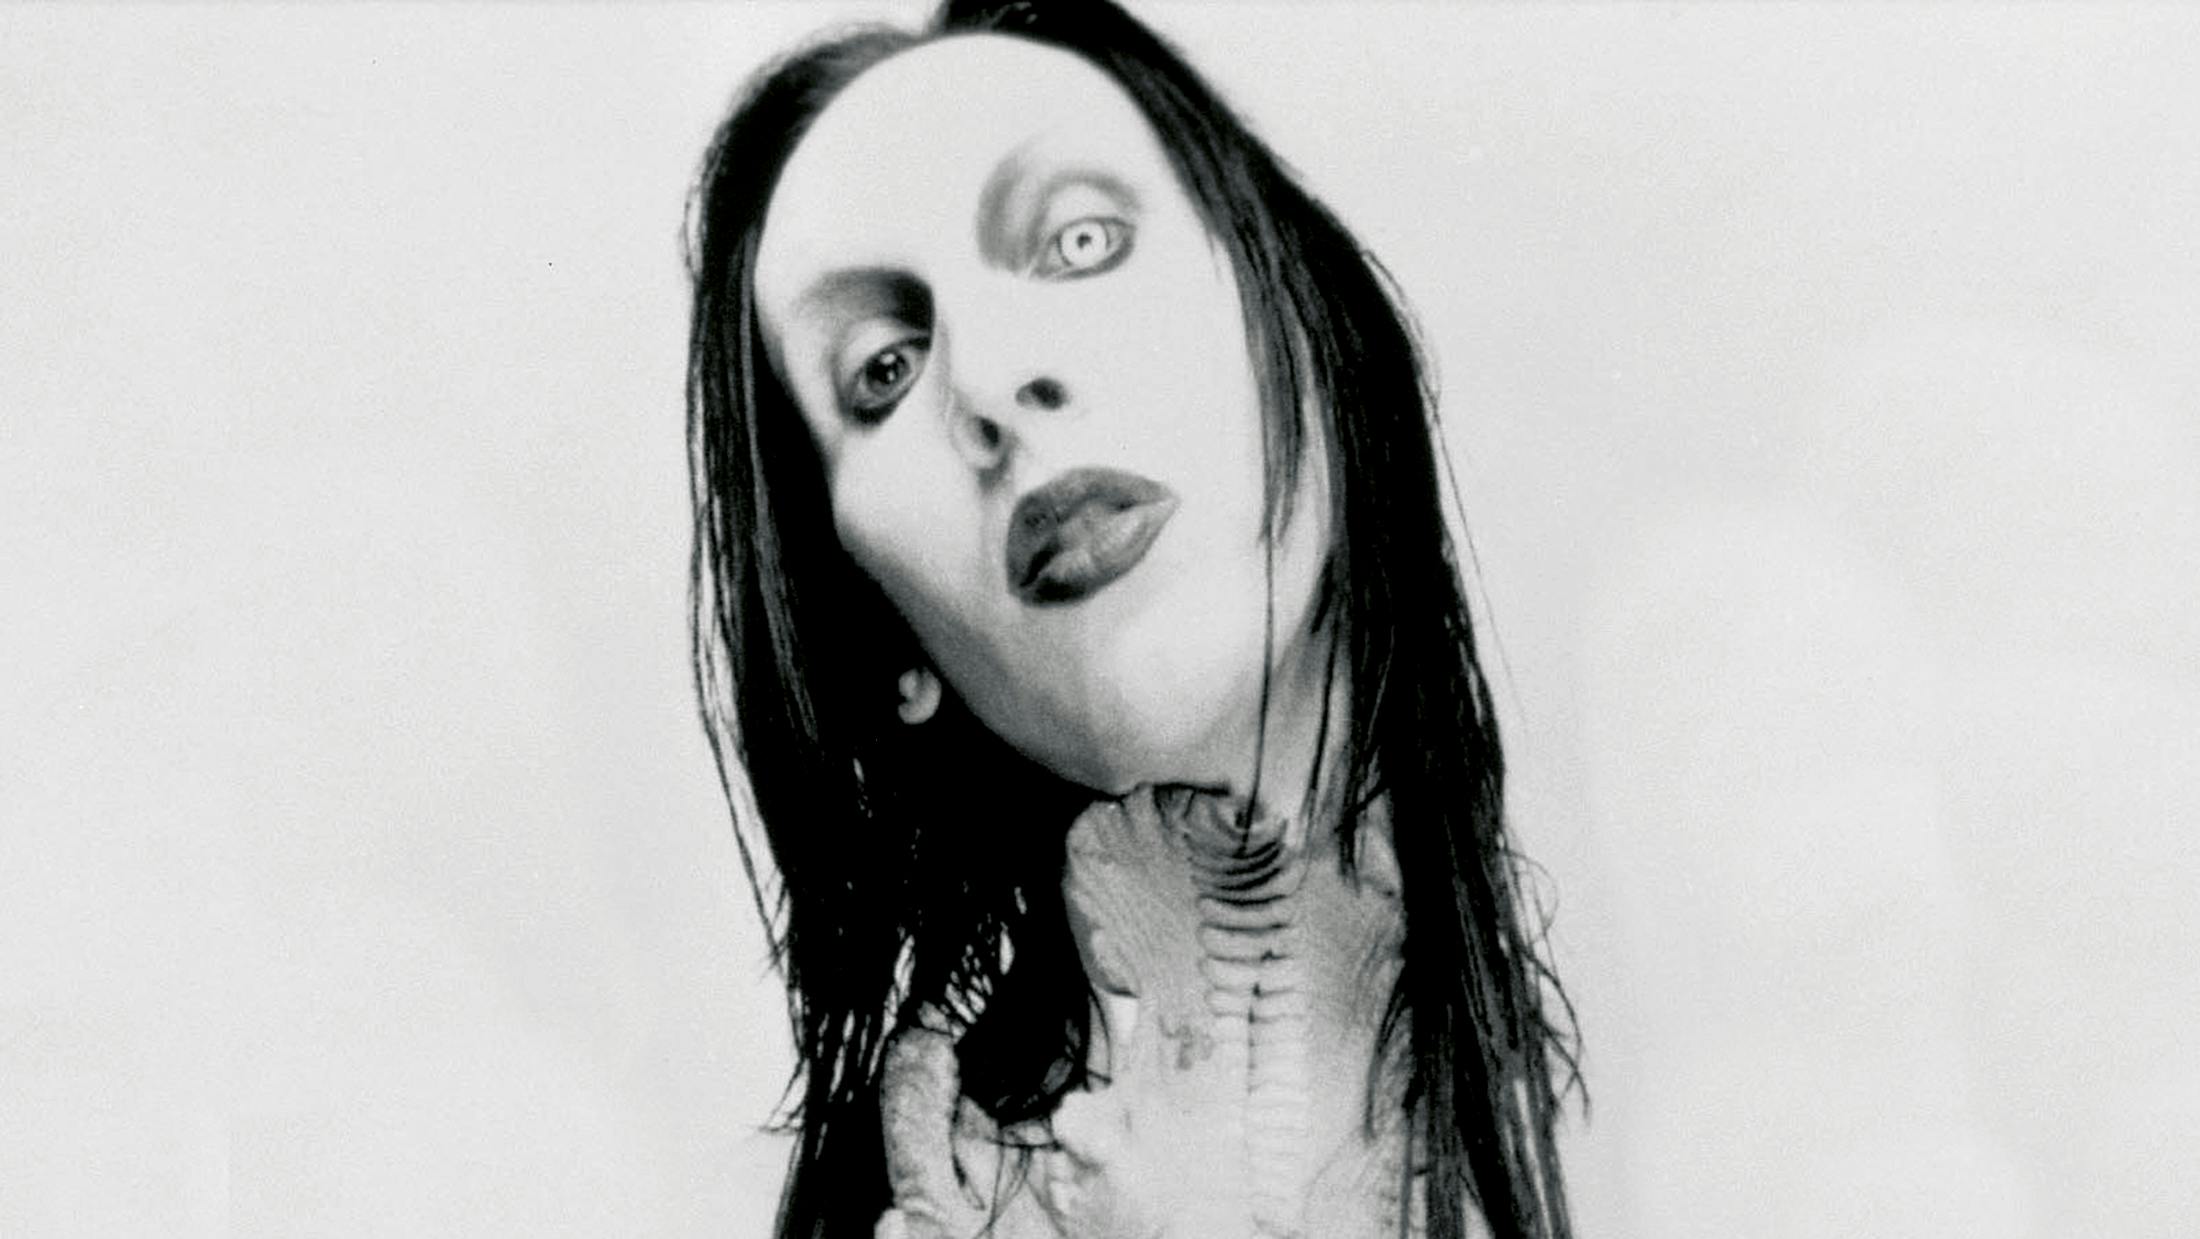 Funko Have Revealed A Holy Wood-Era Marilyn Manson POP! Vinyl